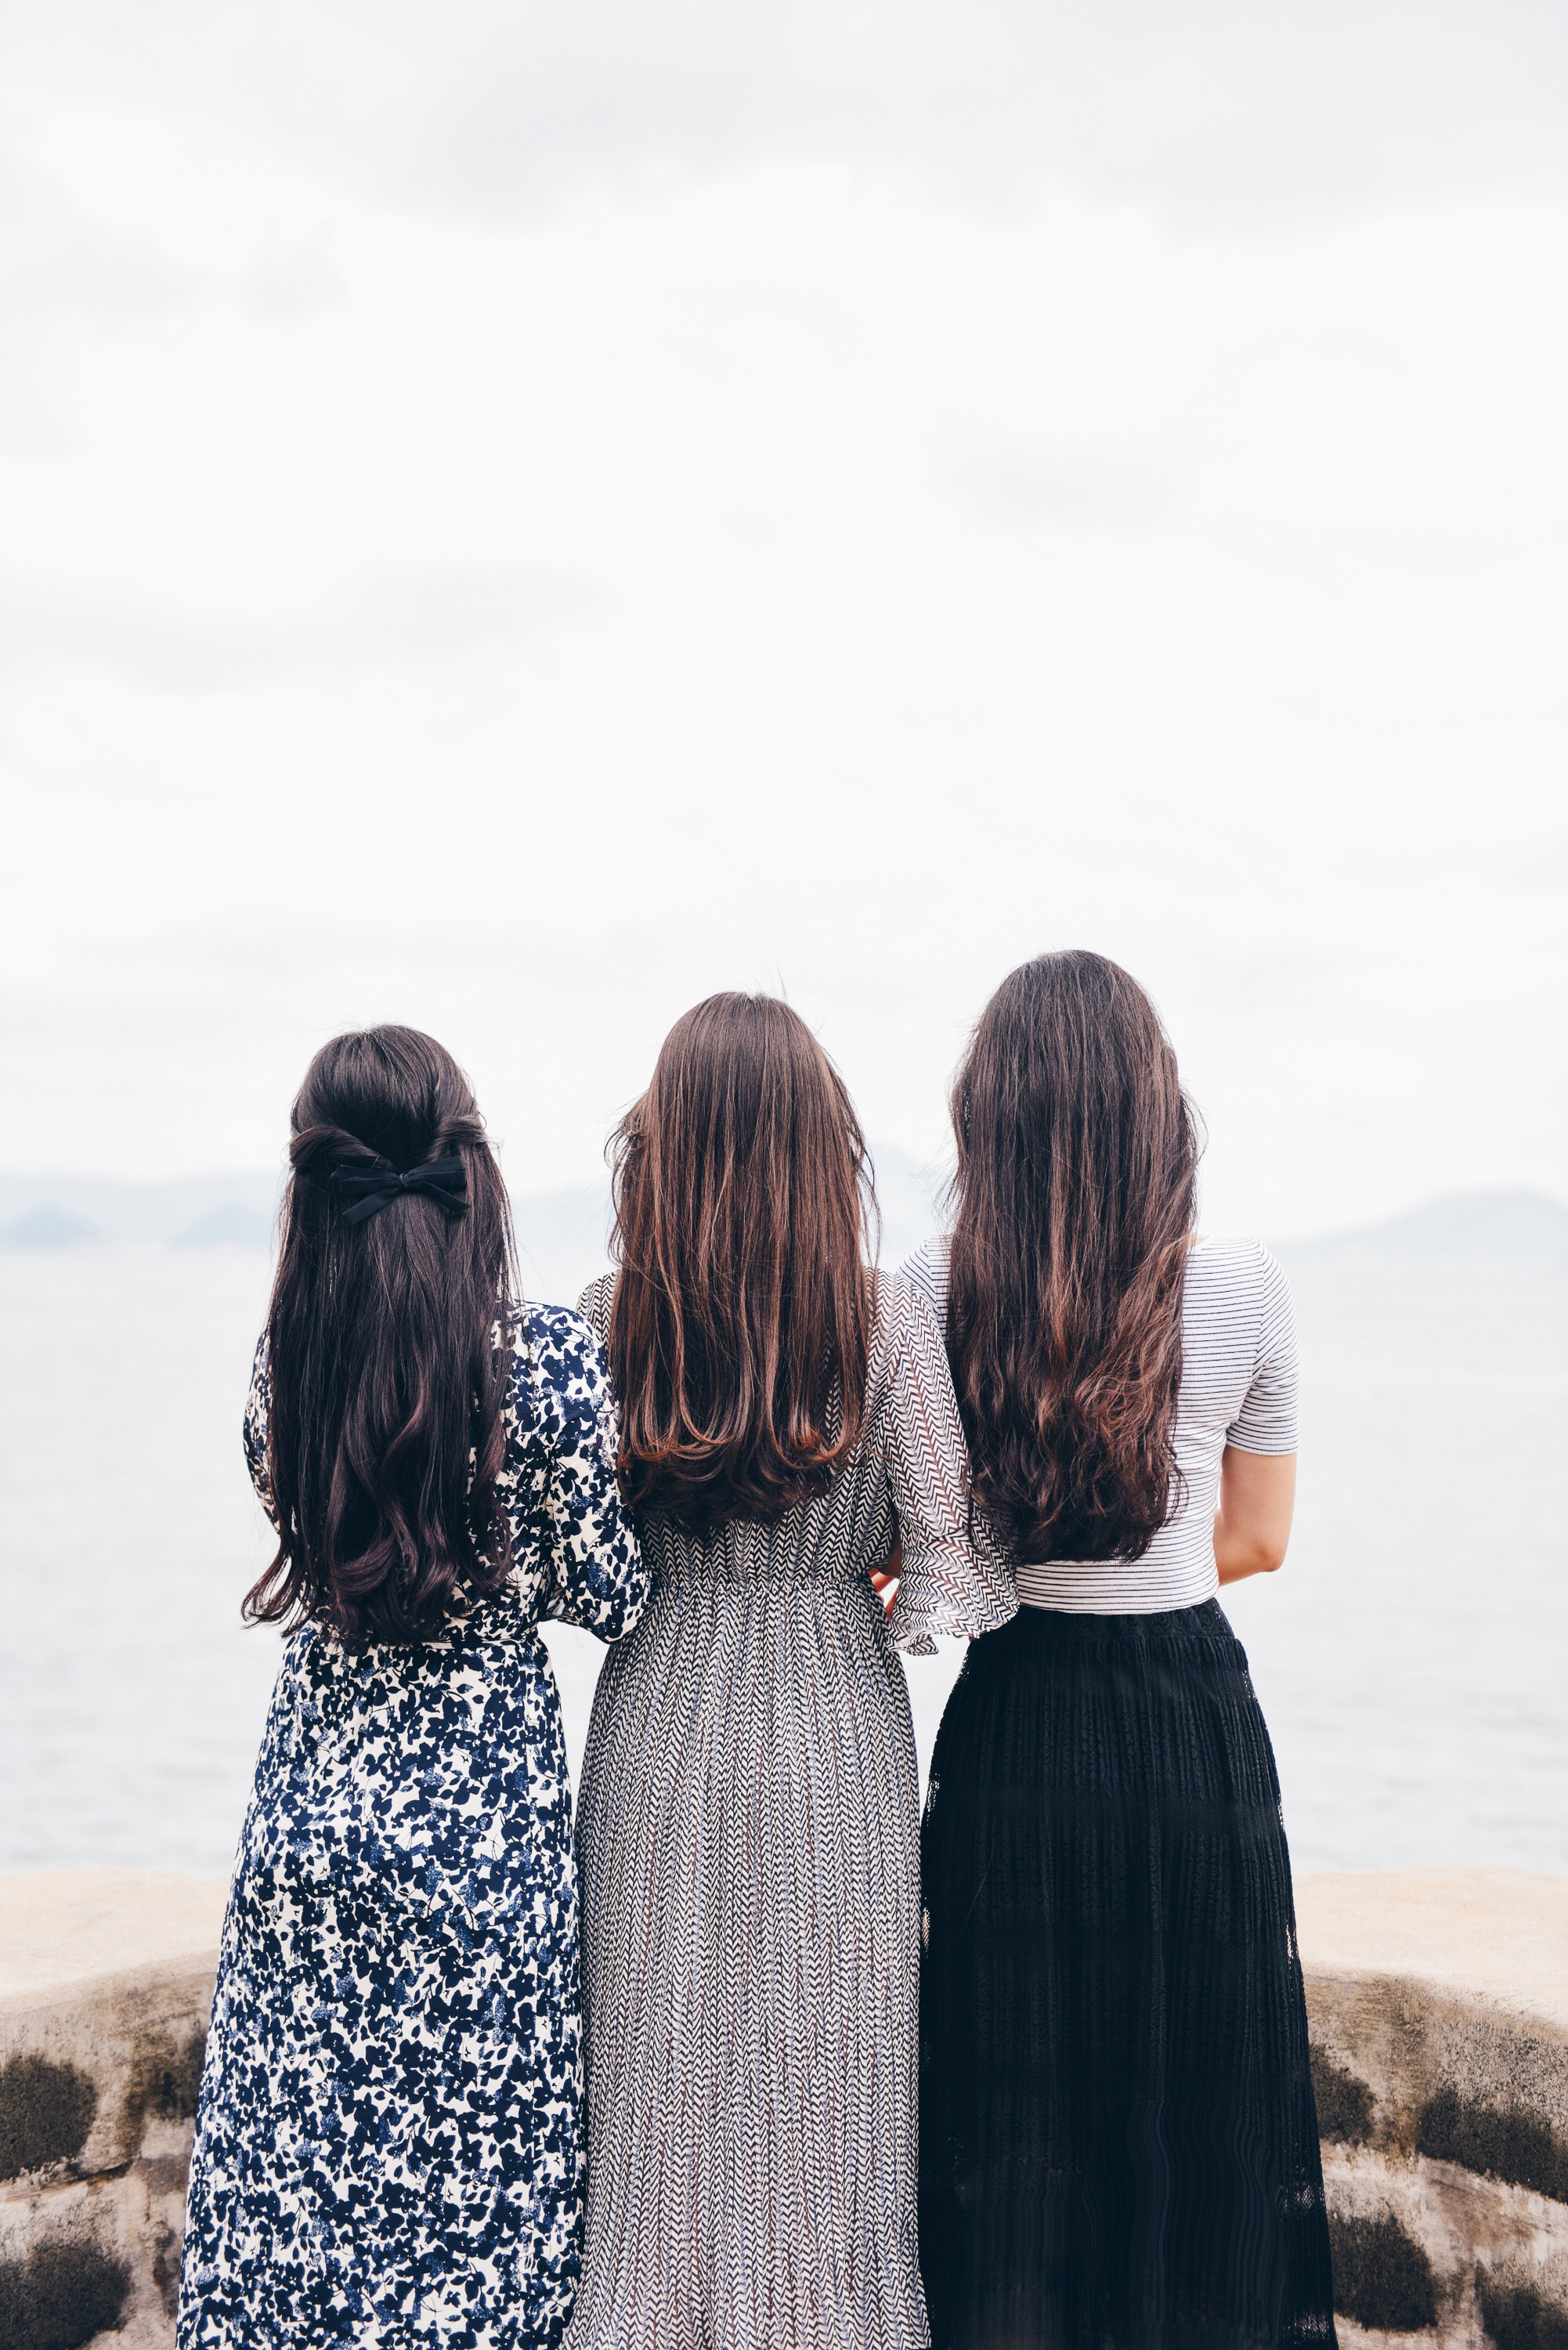 ثلاث نساء